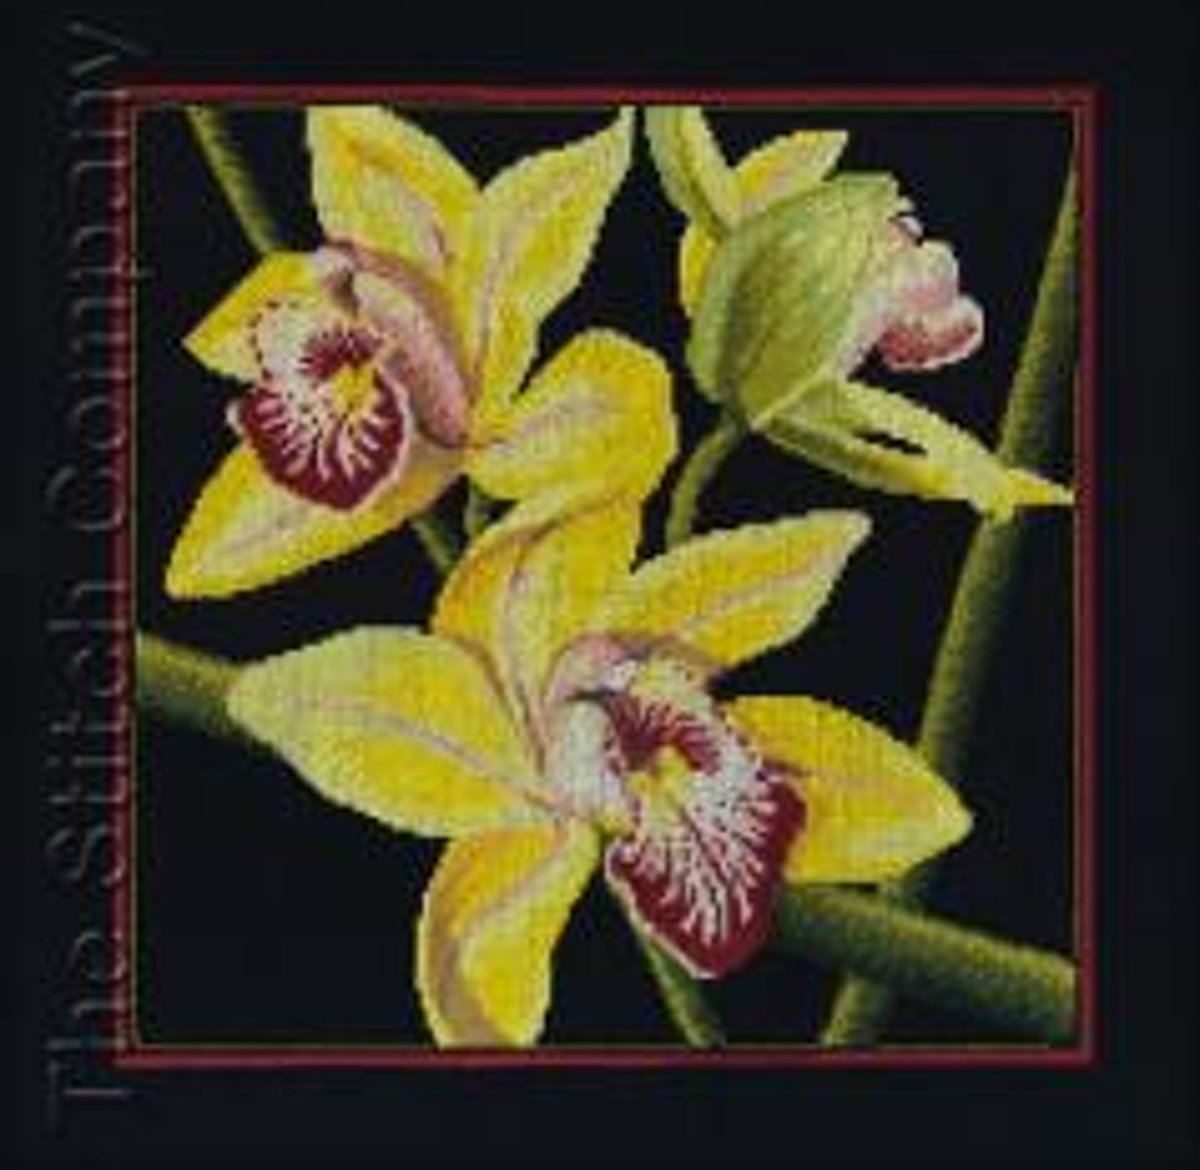 Borduurpakket  Orchids Cymbidium   om te borduren